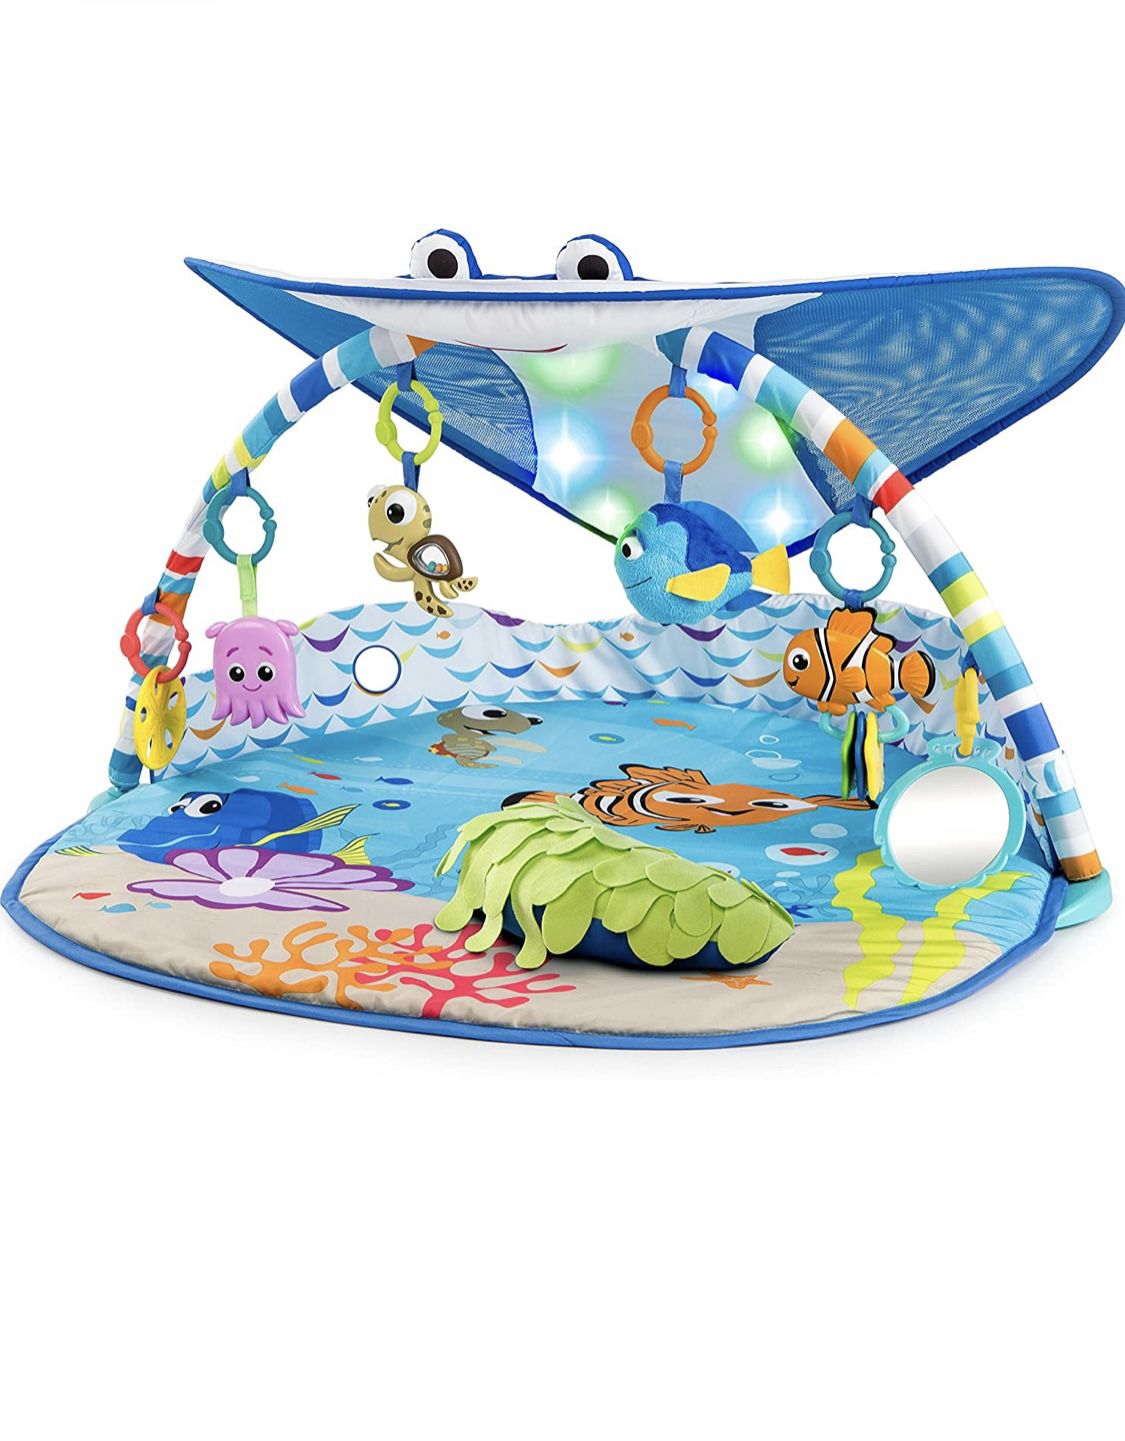 Bright Starts Disney Baby Finding Nemo Mr. Ray Ocean Lights & Music Gym, Ages Newborn